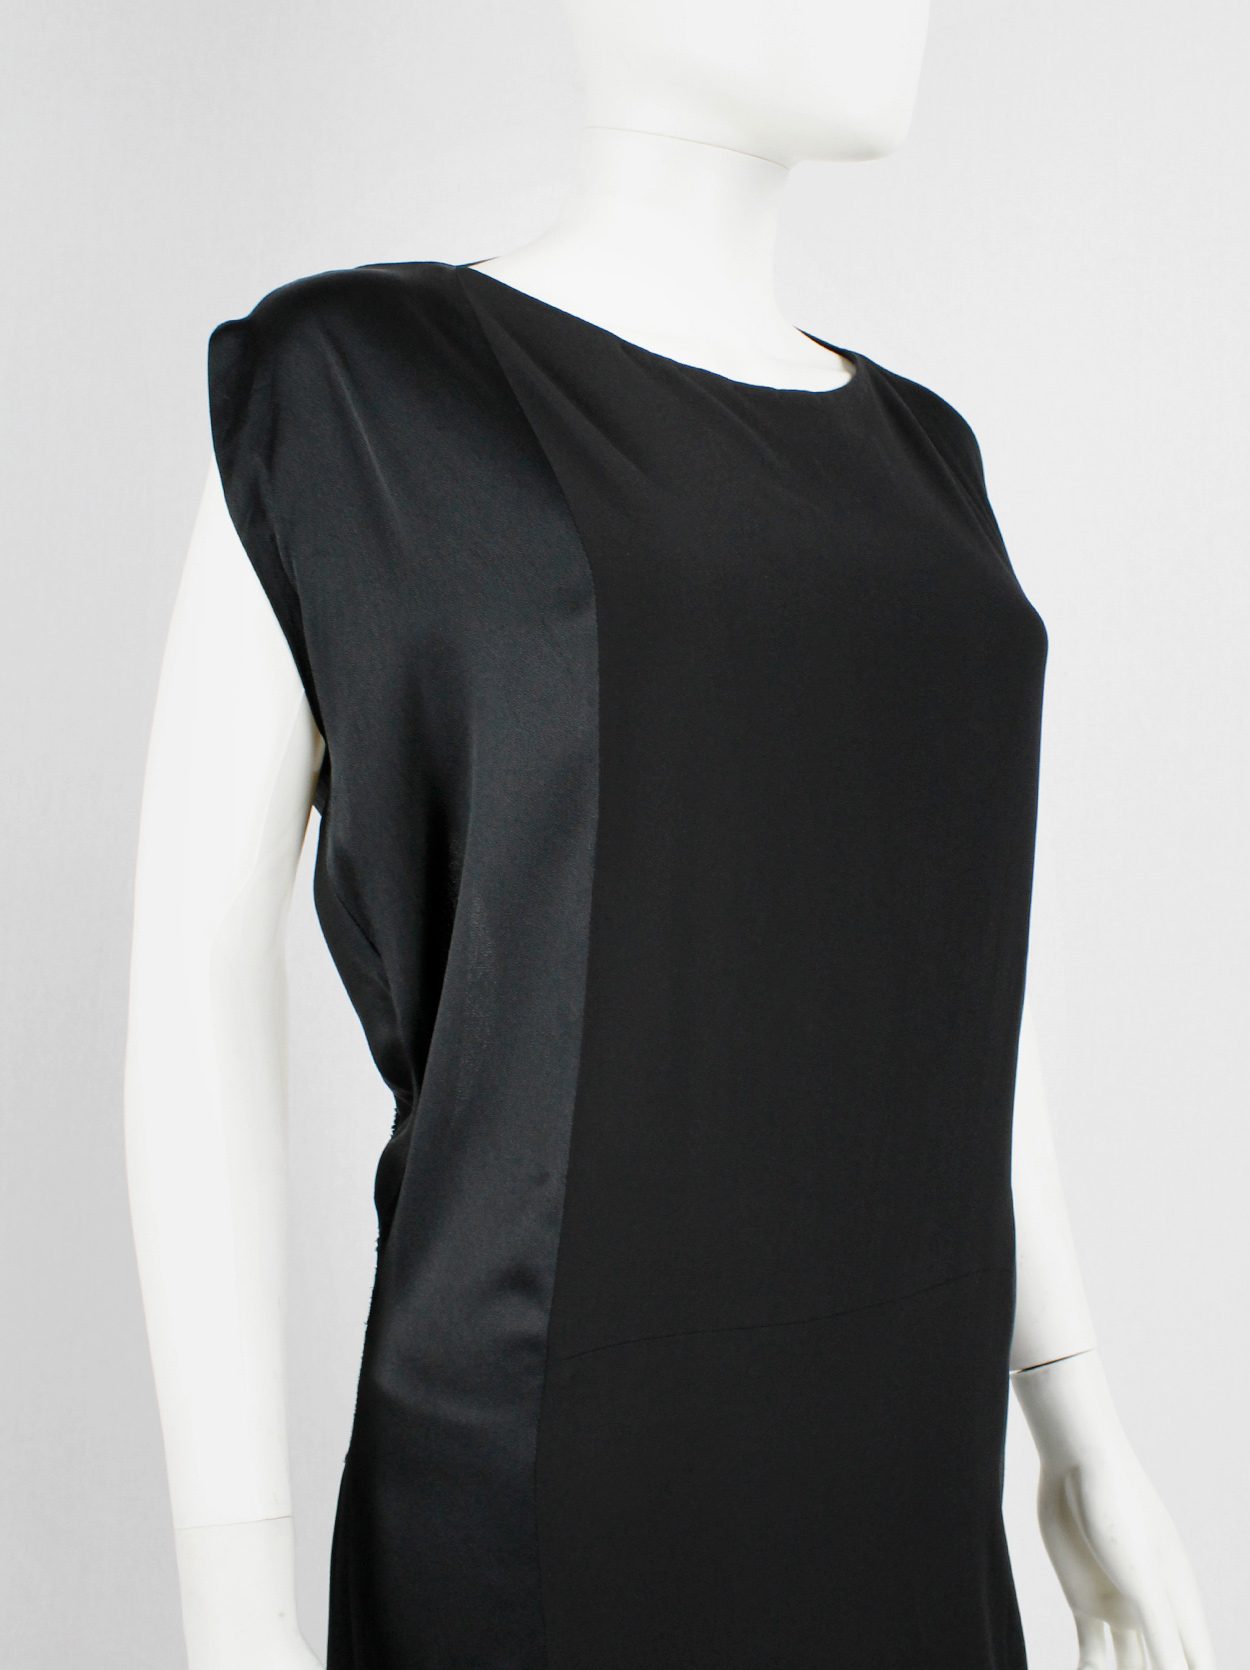 Maison Martin Margiela black backless dress with straps modeled after a ...